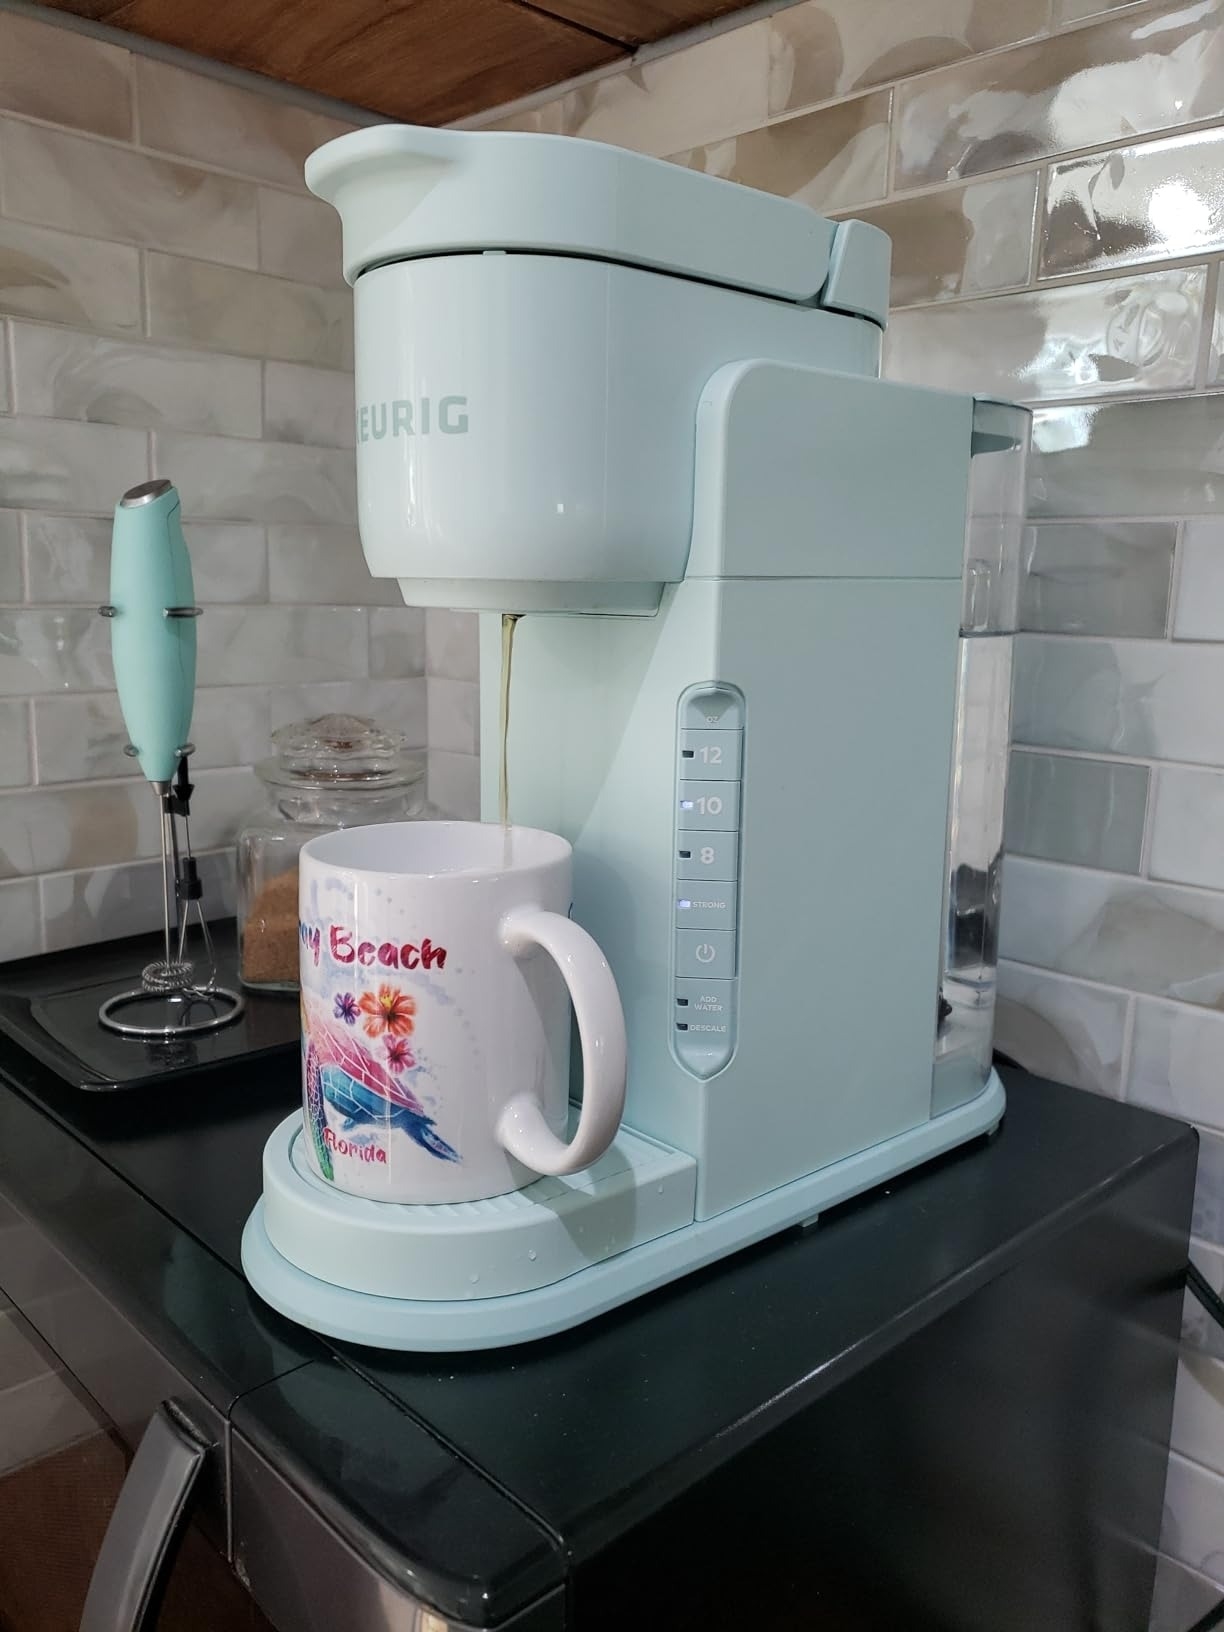 Keurig machine dispensing coffee into a mug